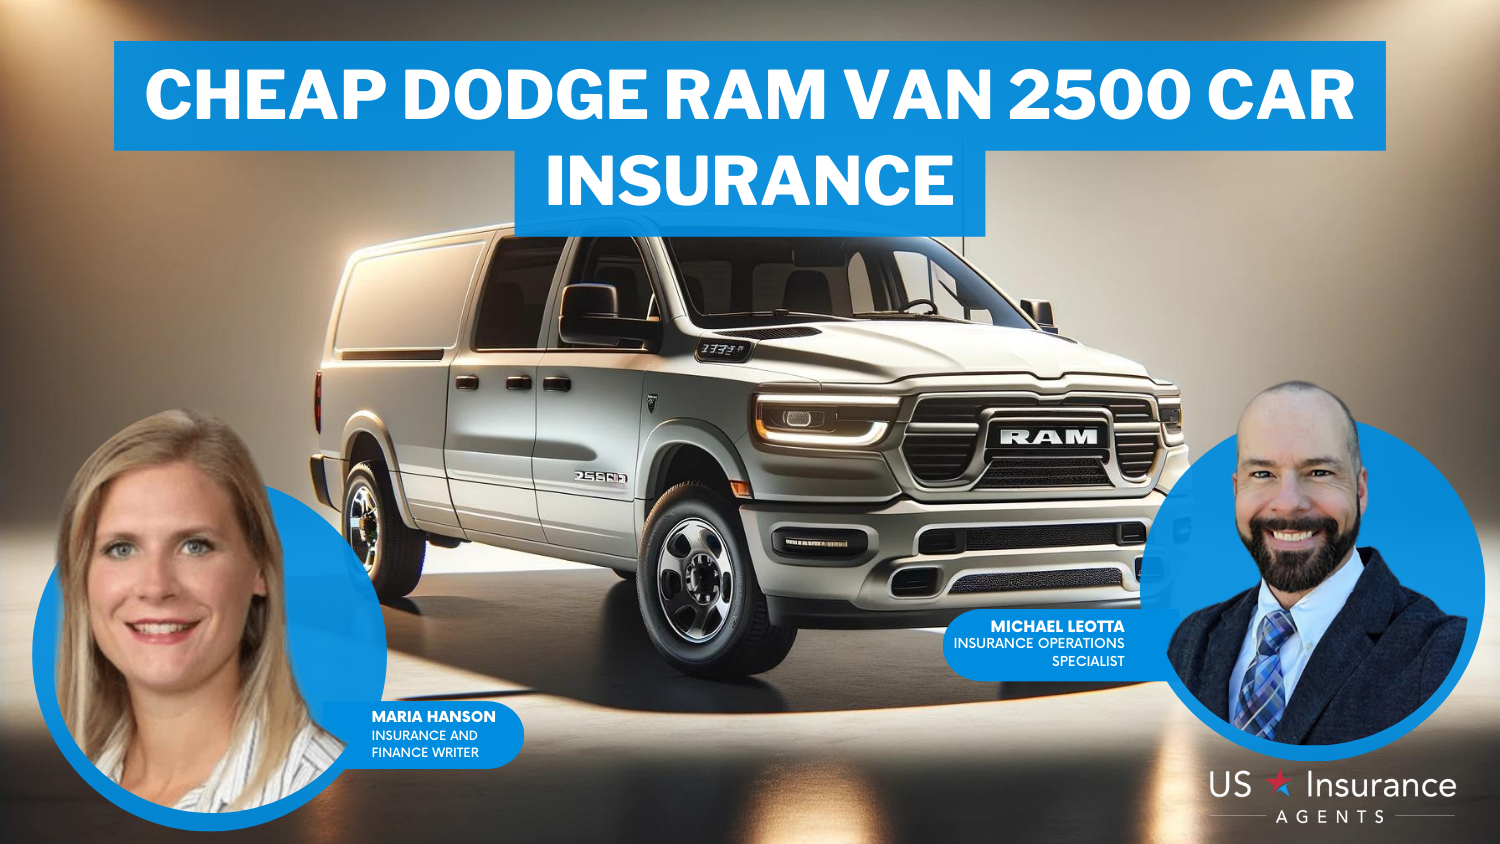 Cheap Dodge Ram Van 2500 Car Insurance: Travelers, State Farm, USAA